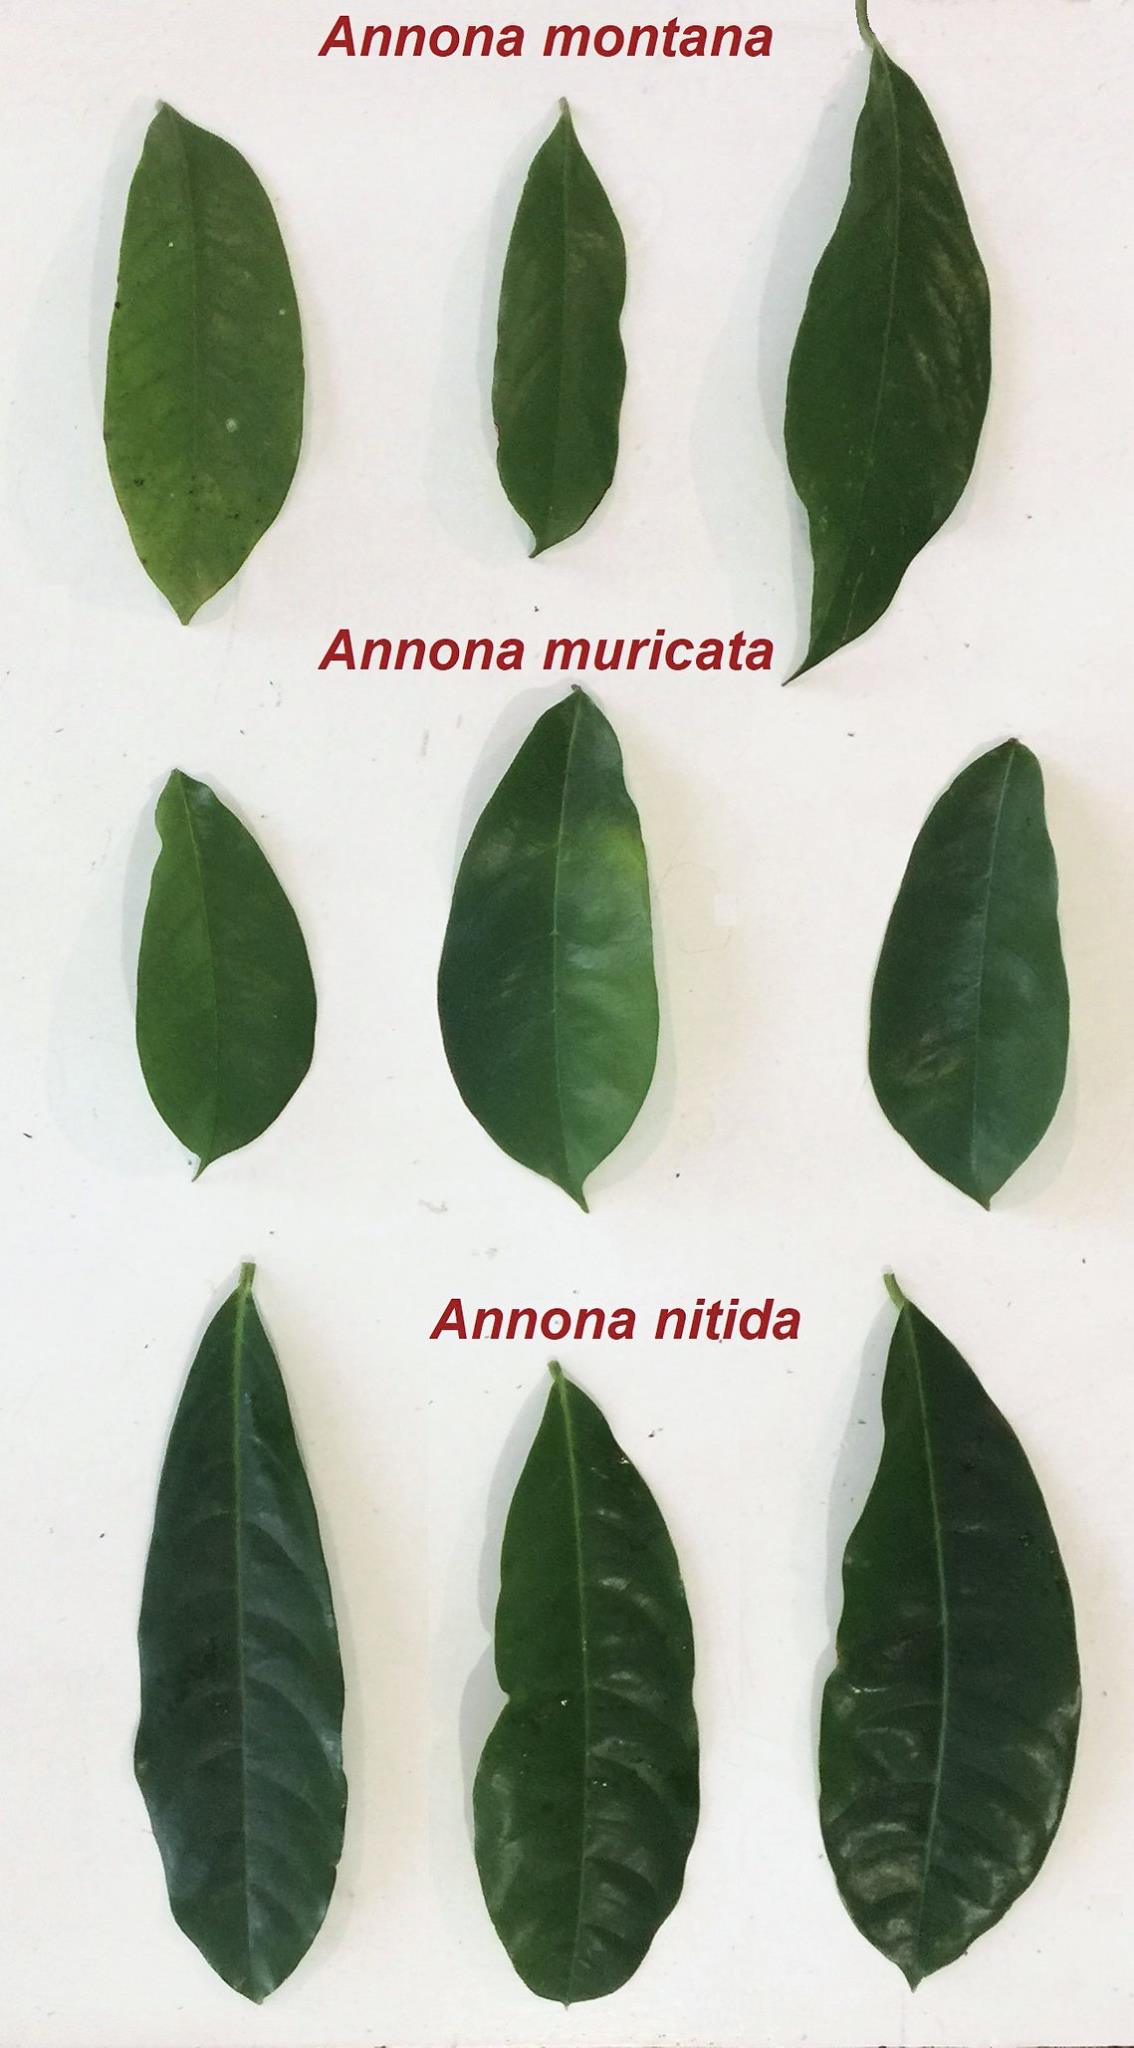 Annona montana - 1 germinated seed / 1 gekeimter Samen